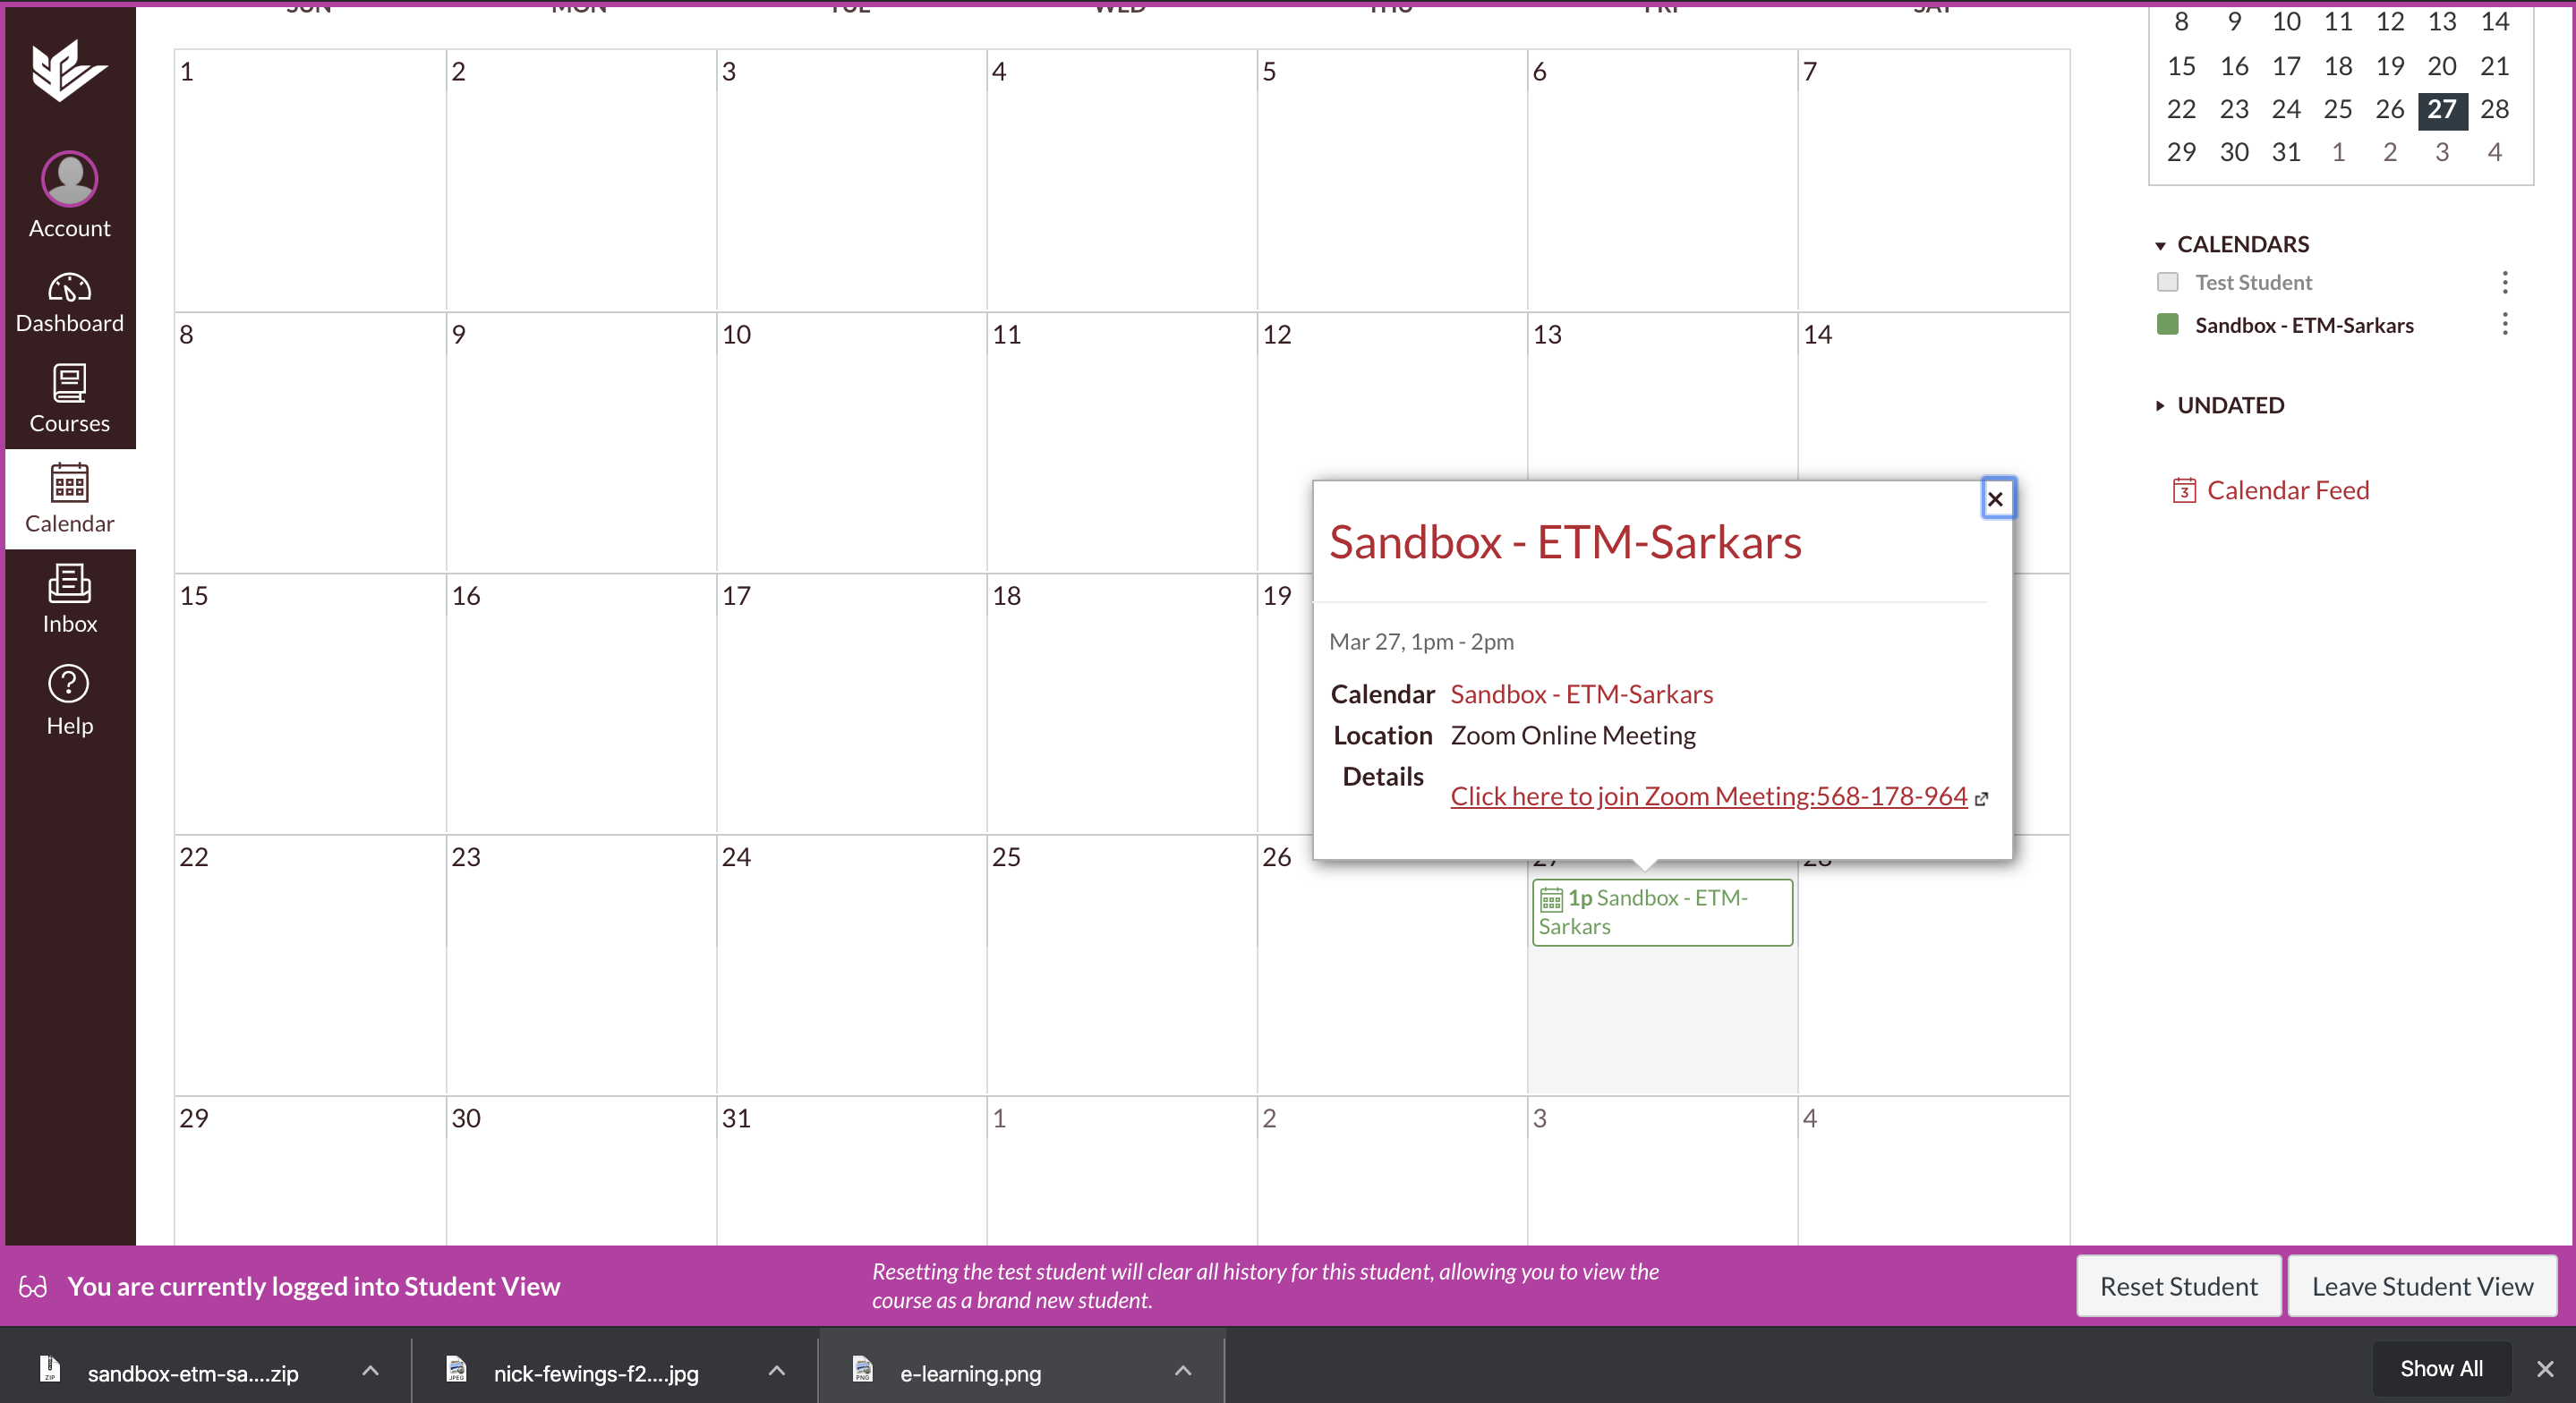 zoom meeting scheduled in Canvas calendar  